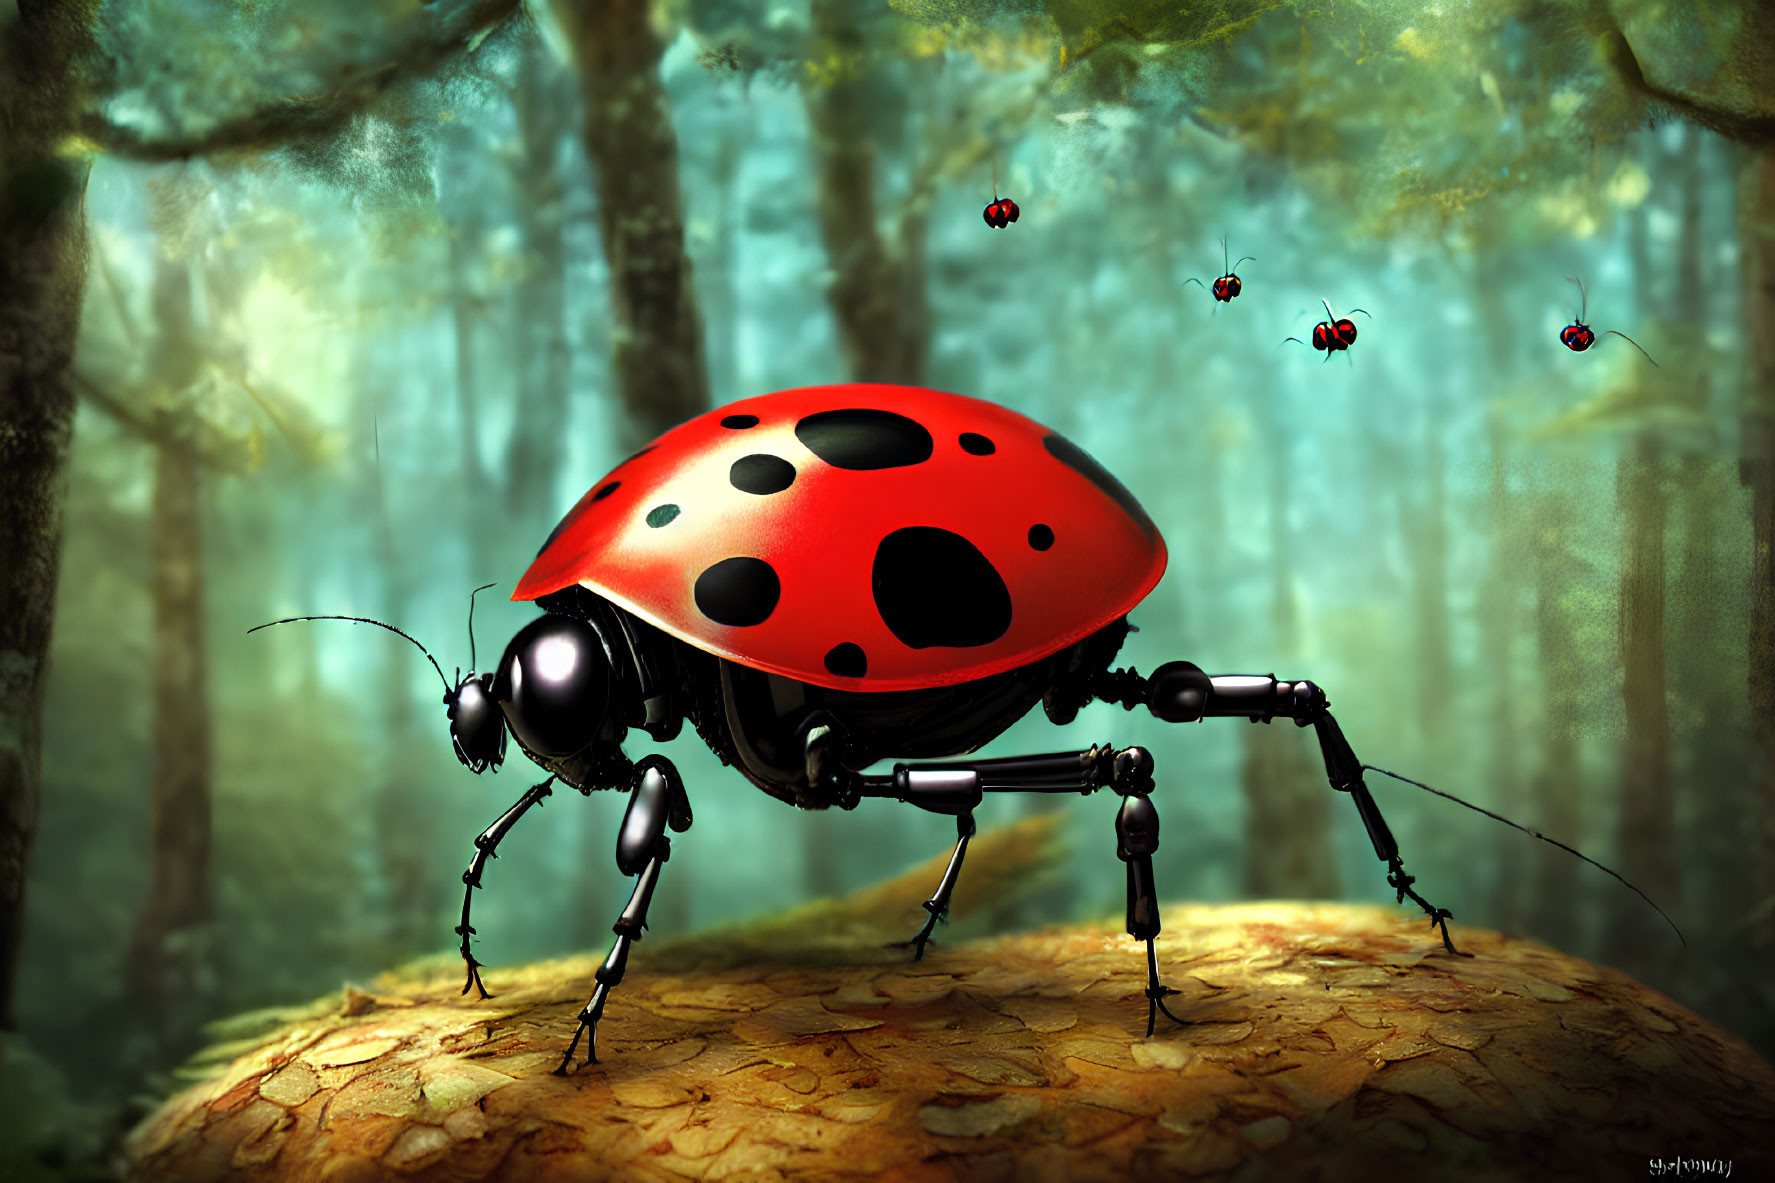 Detailed digital illustration of oversized ladybug on earthy mound in forest setting